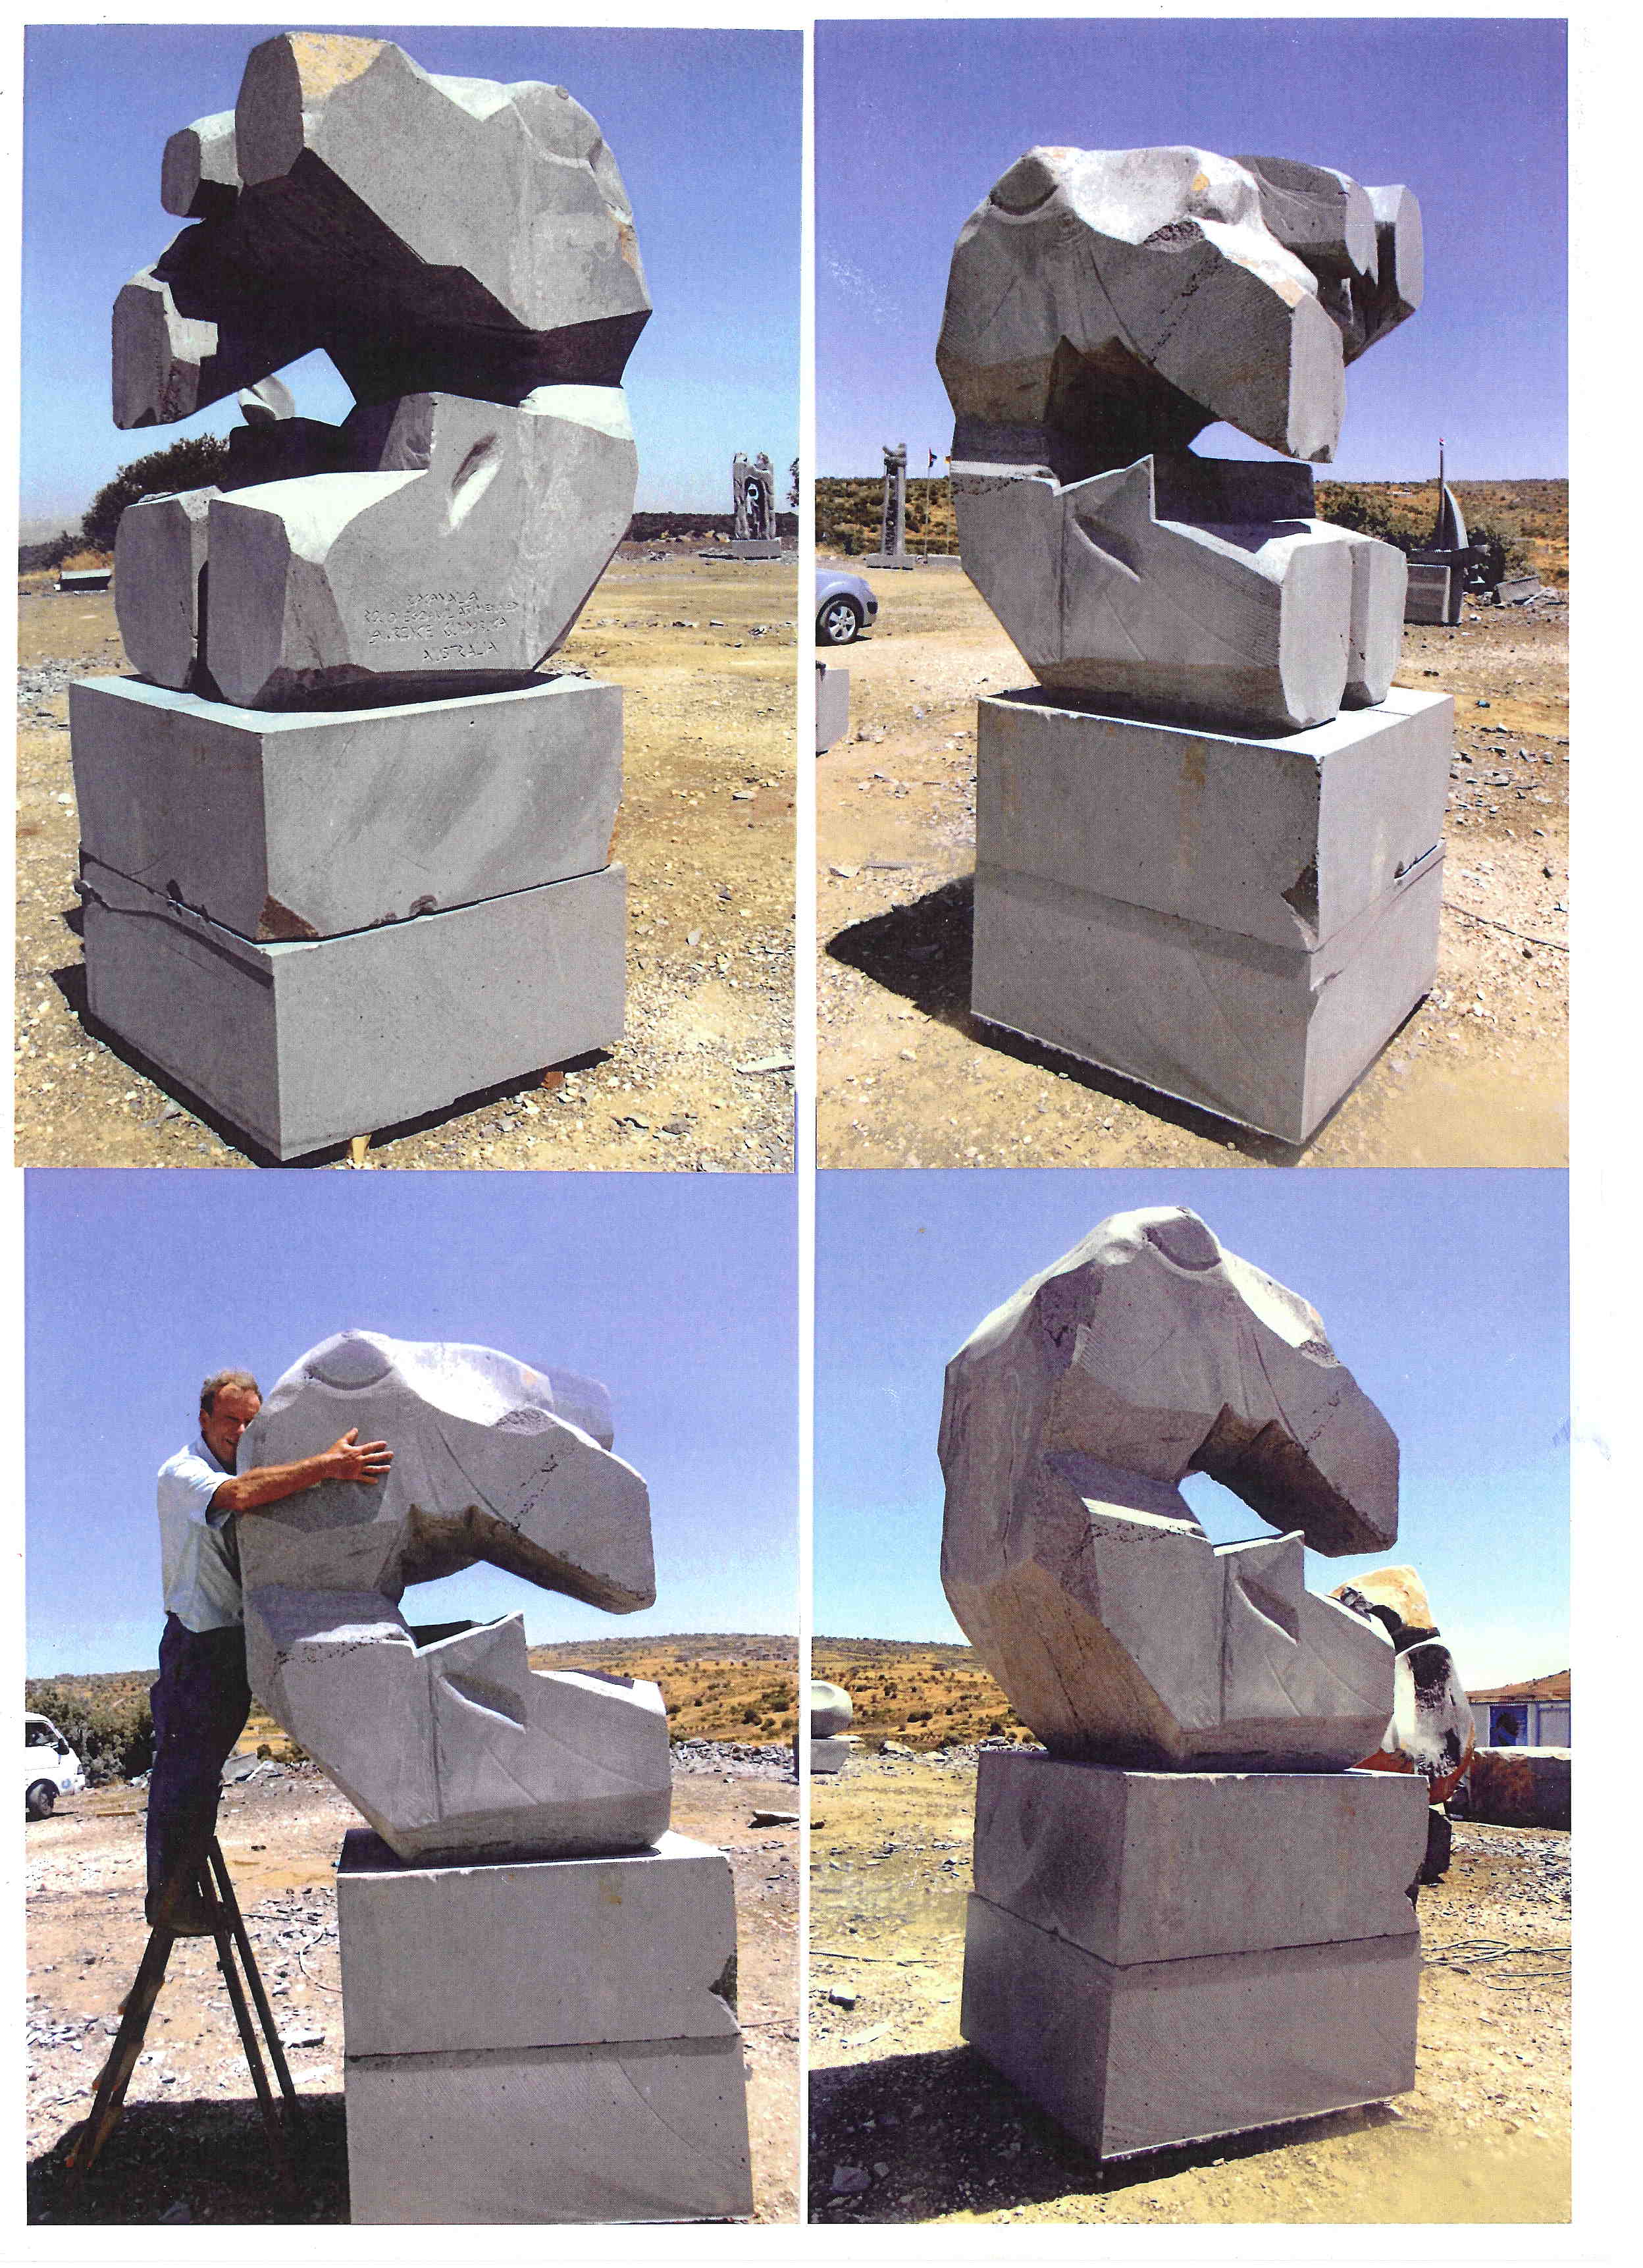 Sculpture fotos of 